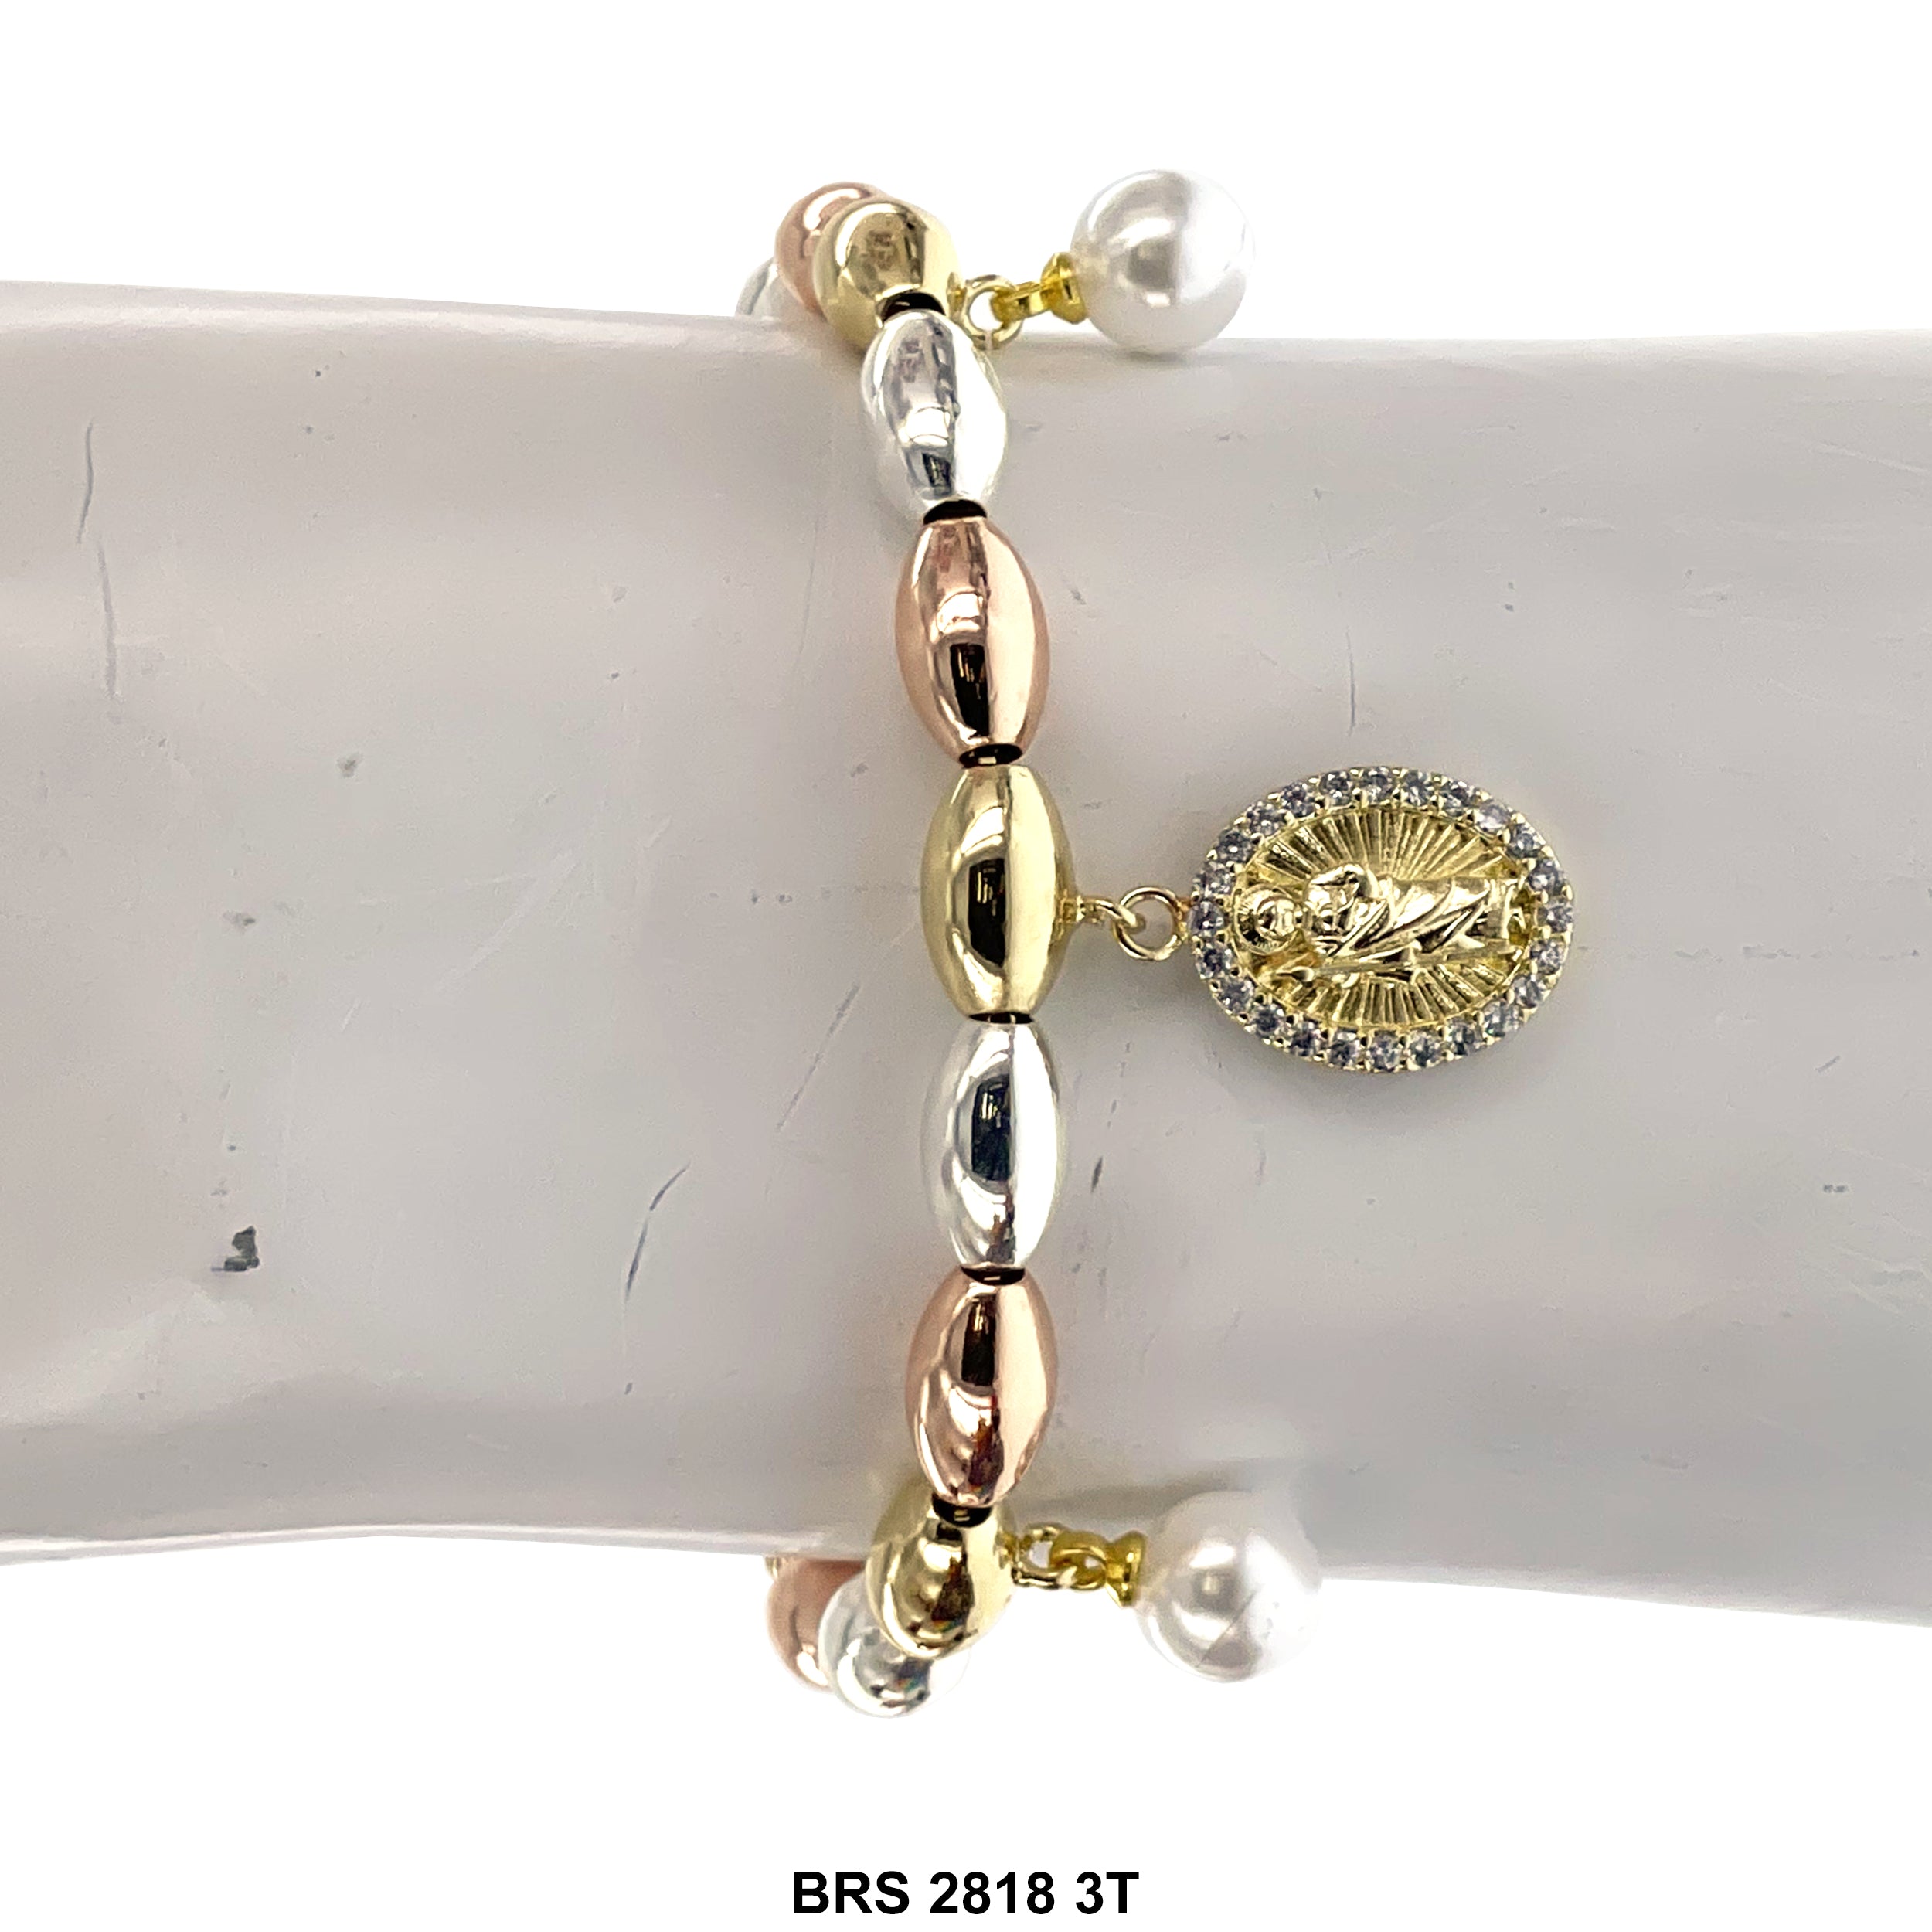 San Judas Pearl Charms Oval Beads Adjustable Bracelet BRS 2818 3T